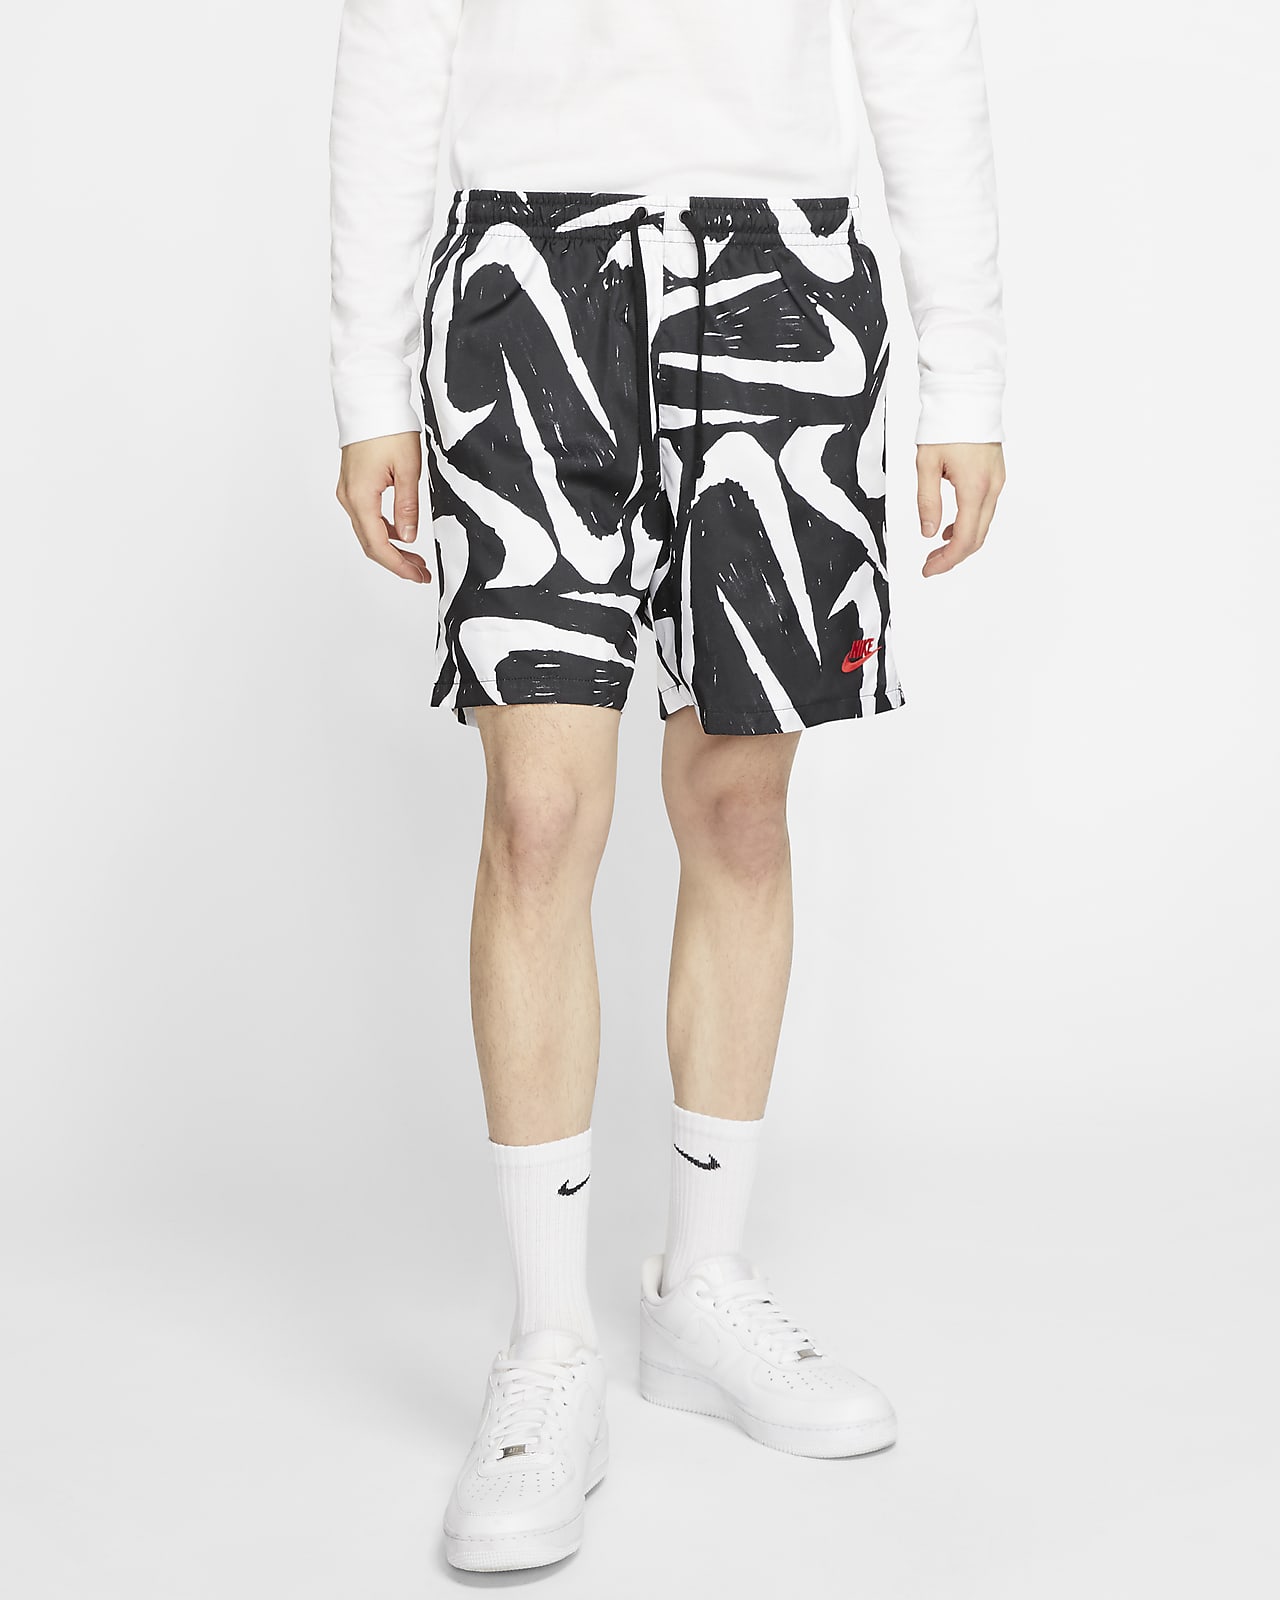 nike sportswear city edition men's woven shorts